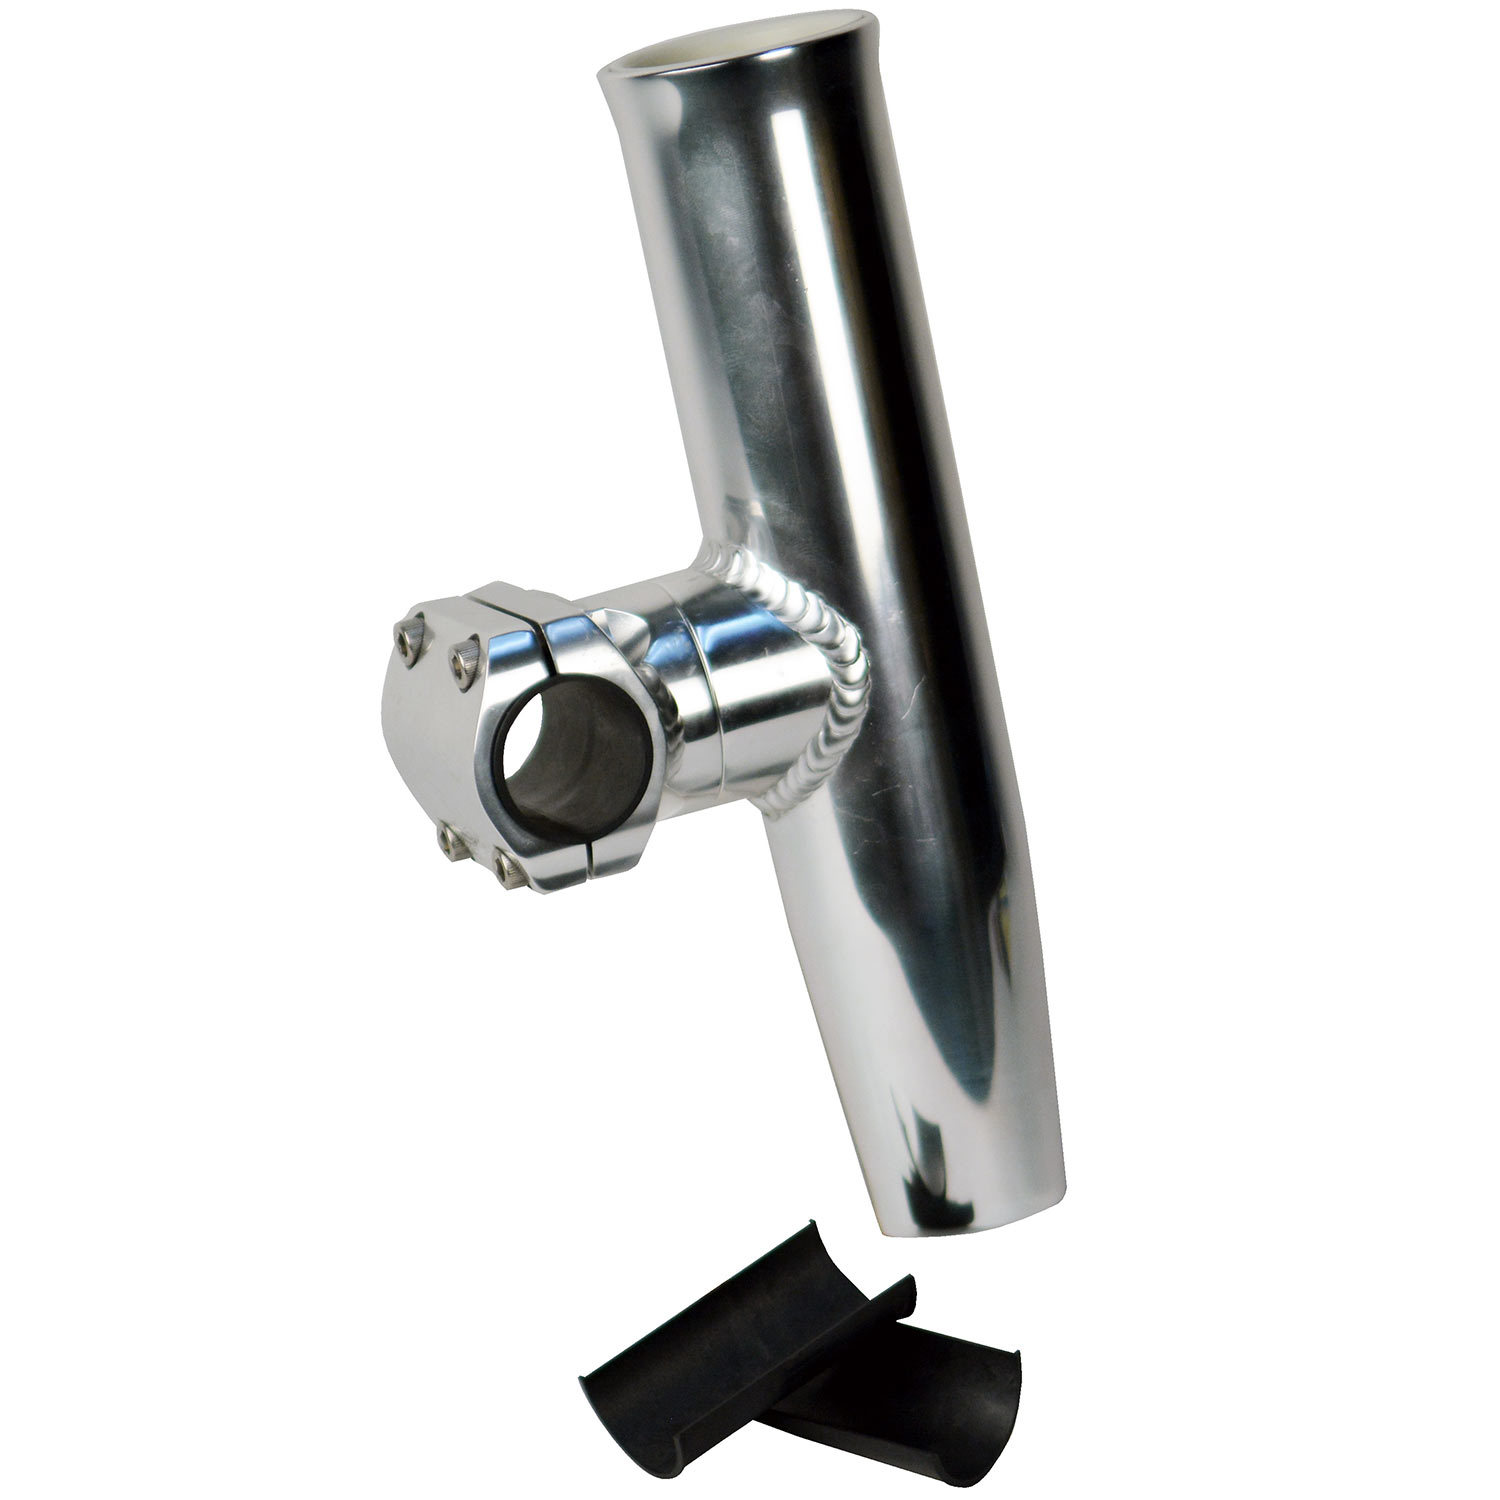 C E SMITH Aluminum Adjustable Rod Holder, Fits 7/8, 1, or 1-1/16  Measured Outside Diameter